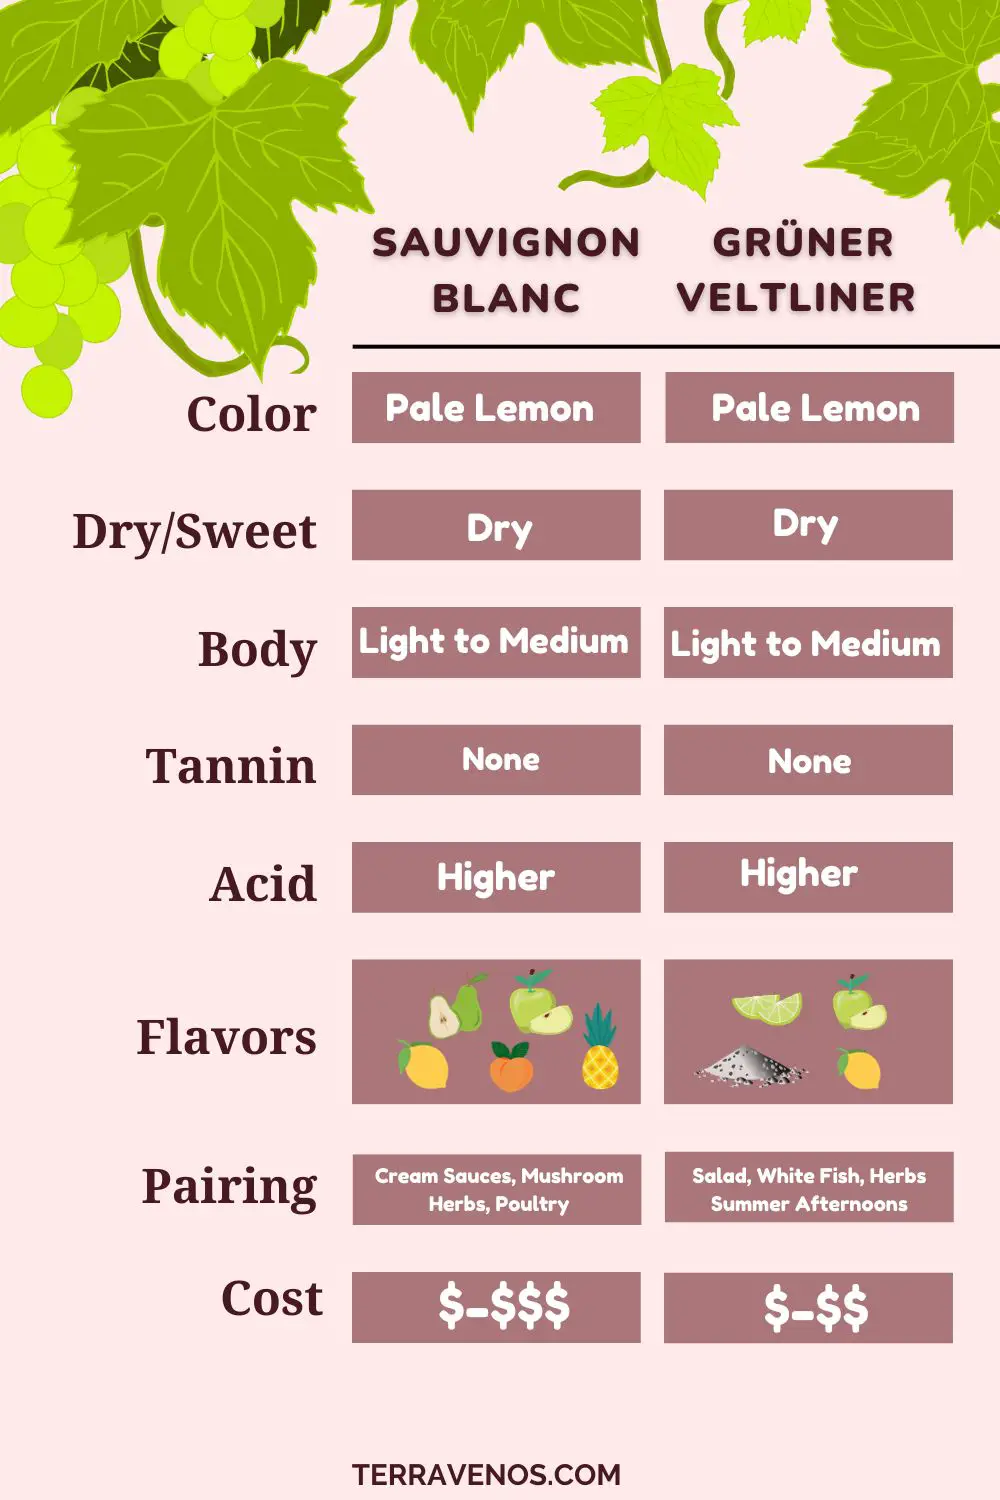 sauvignon blanc vs gruner veltliner comparison infographic